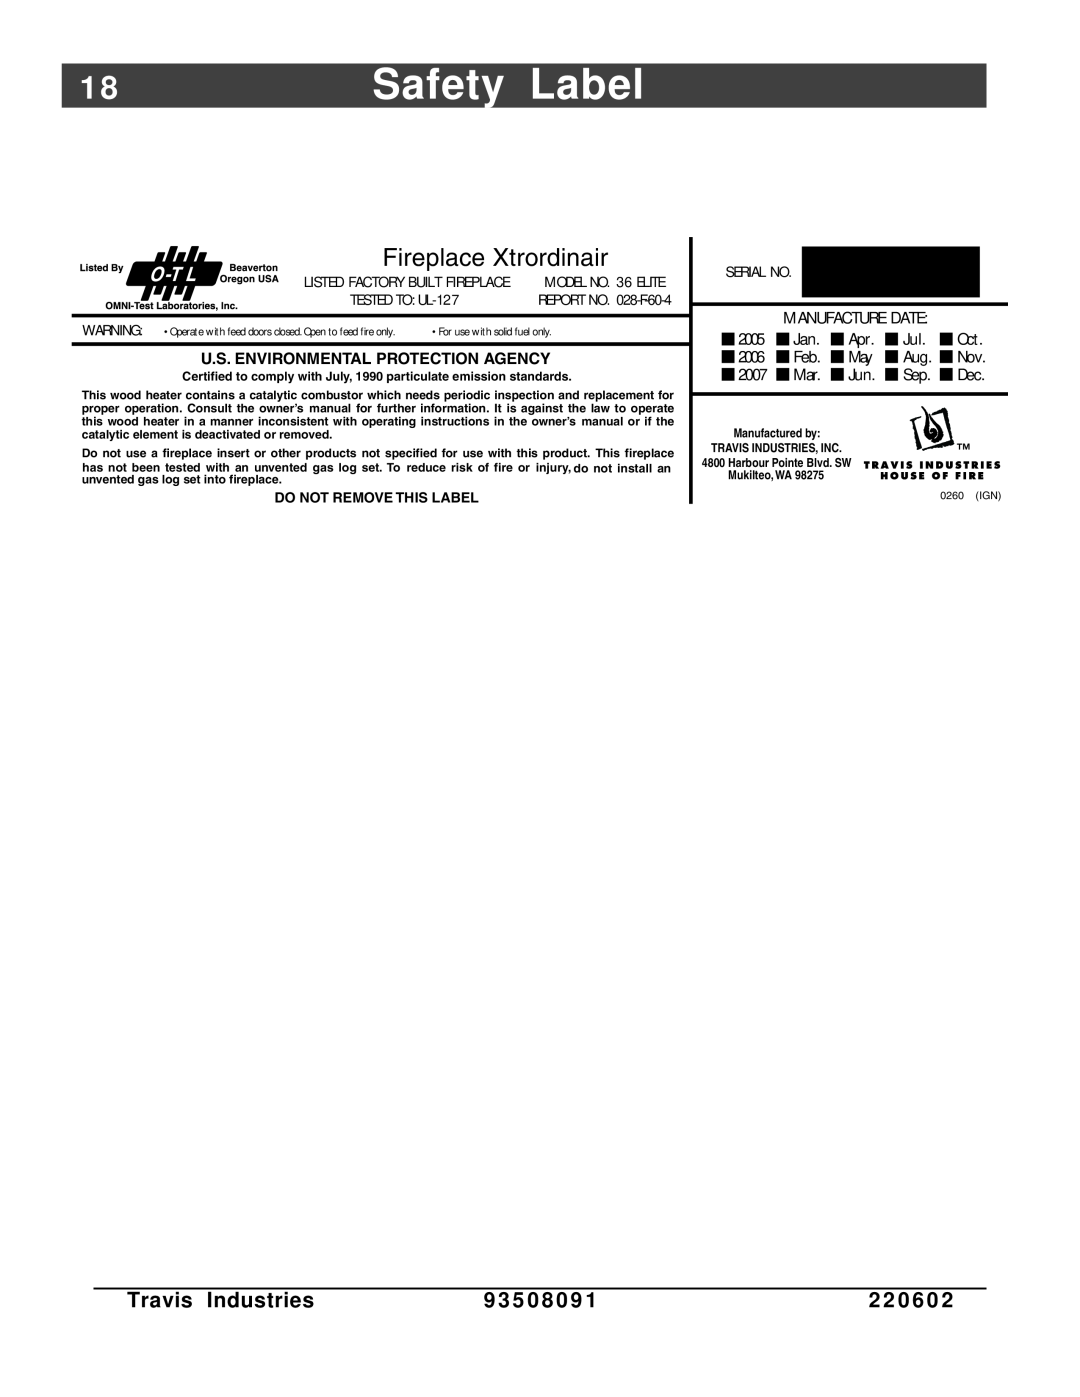 FireplaceXtrordinair 36-Elite owner manual Safety Label, Fireplace Xtrordinair, Travis Industries, 9 3 5, 2 2 0 